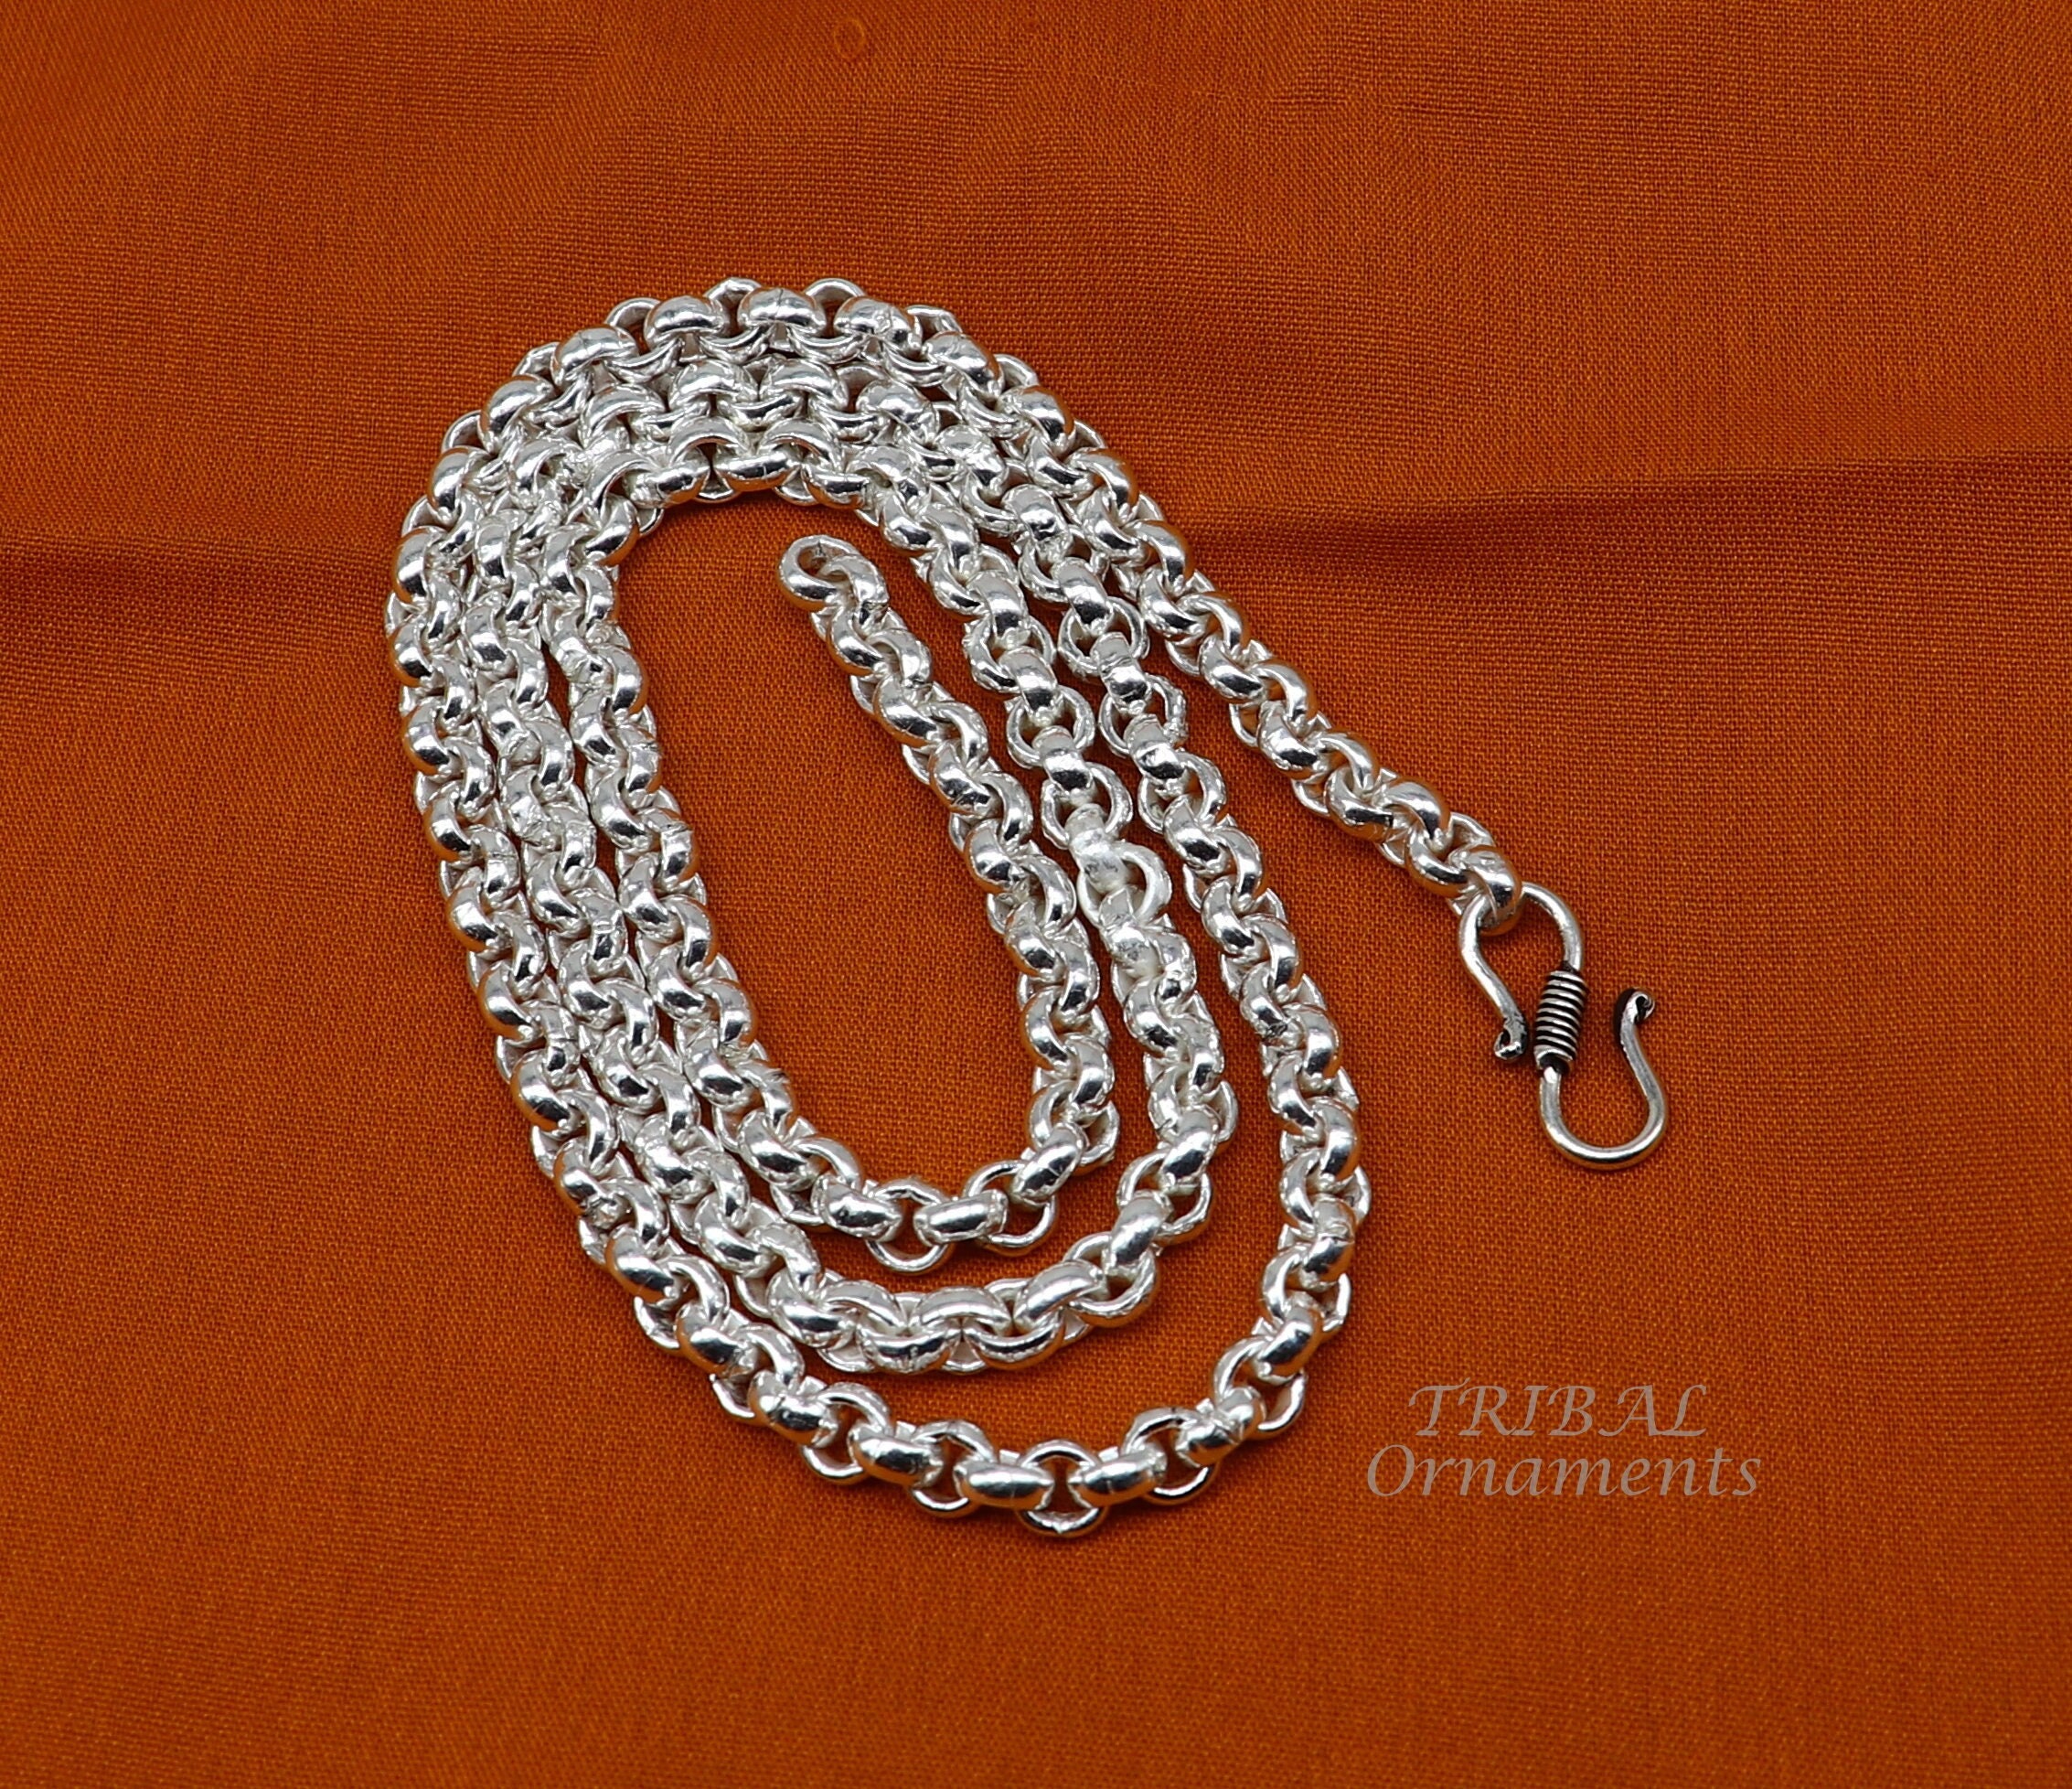 Pure 999 Fine Silver Chain Men Women 5.5mm Round Twist Rope Link Necklace